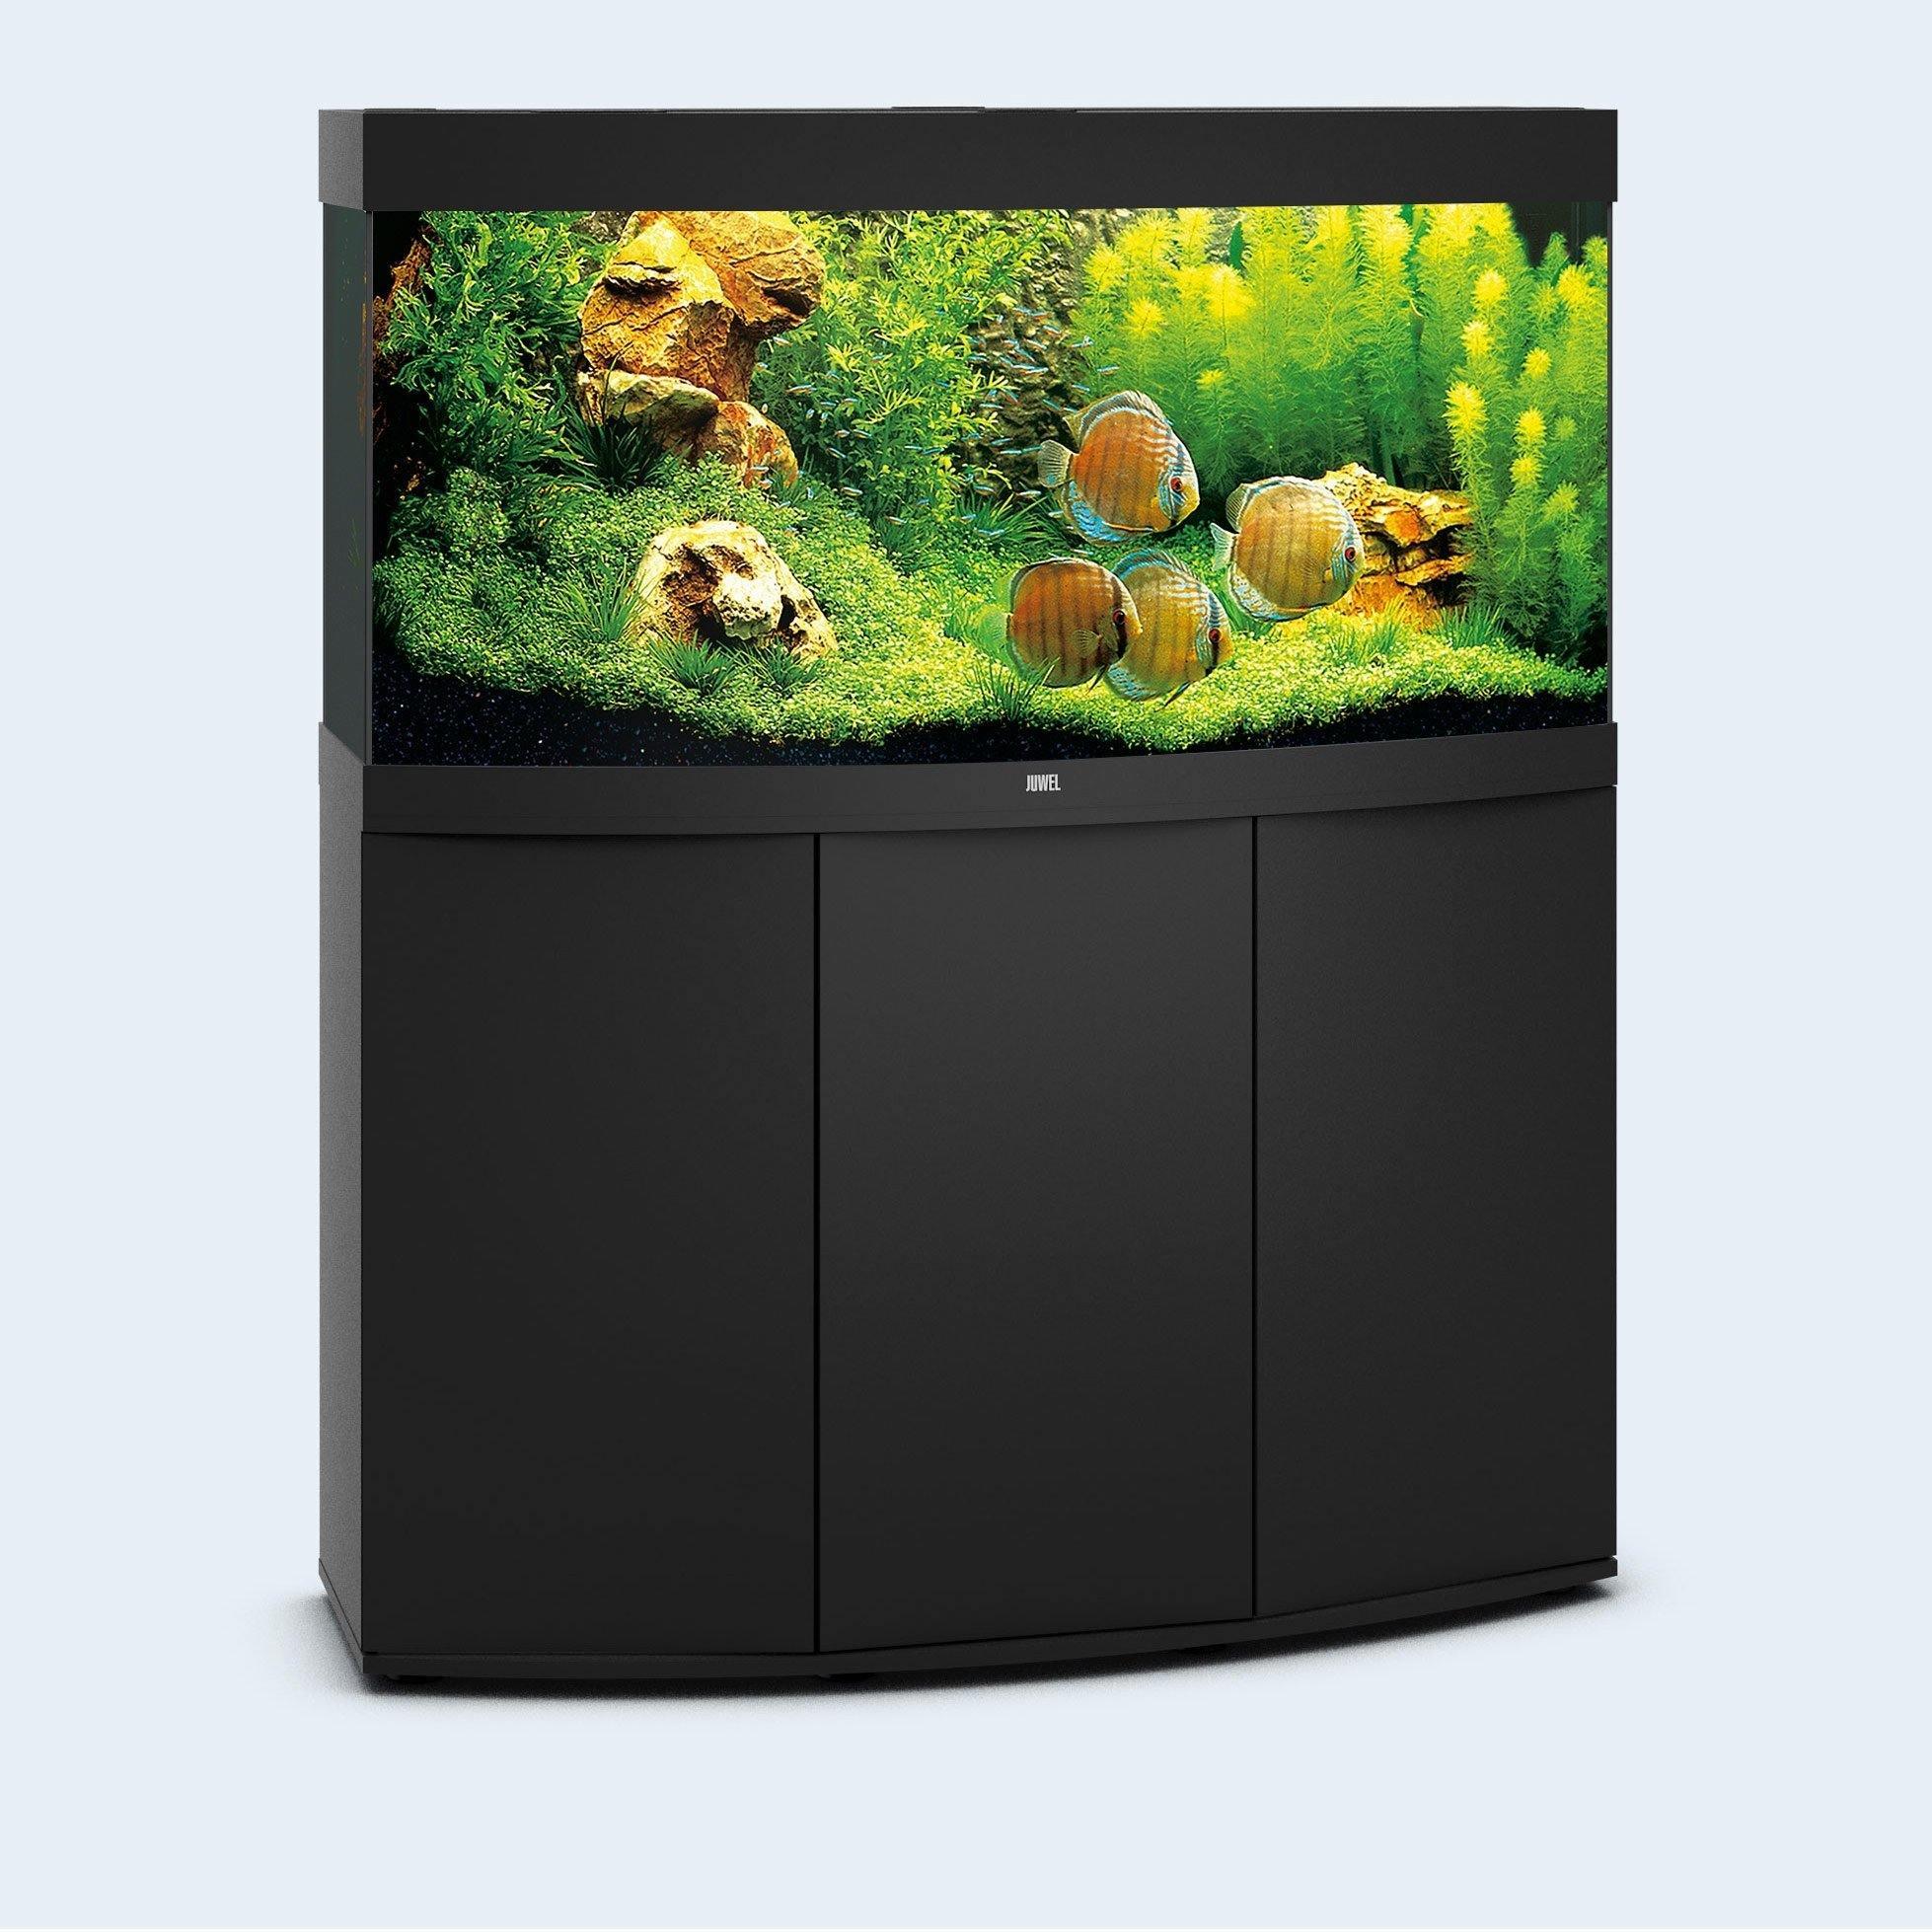 Juwel Vision 260 LED Aquarium and Cabinet - Black